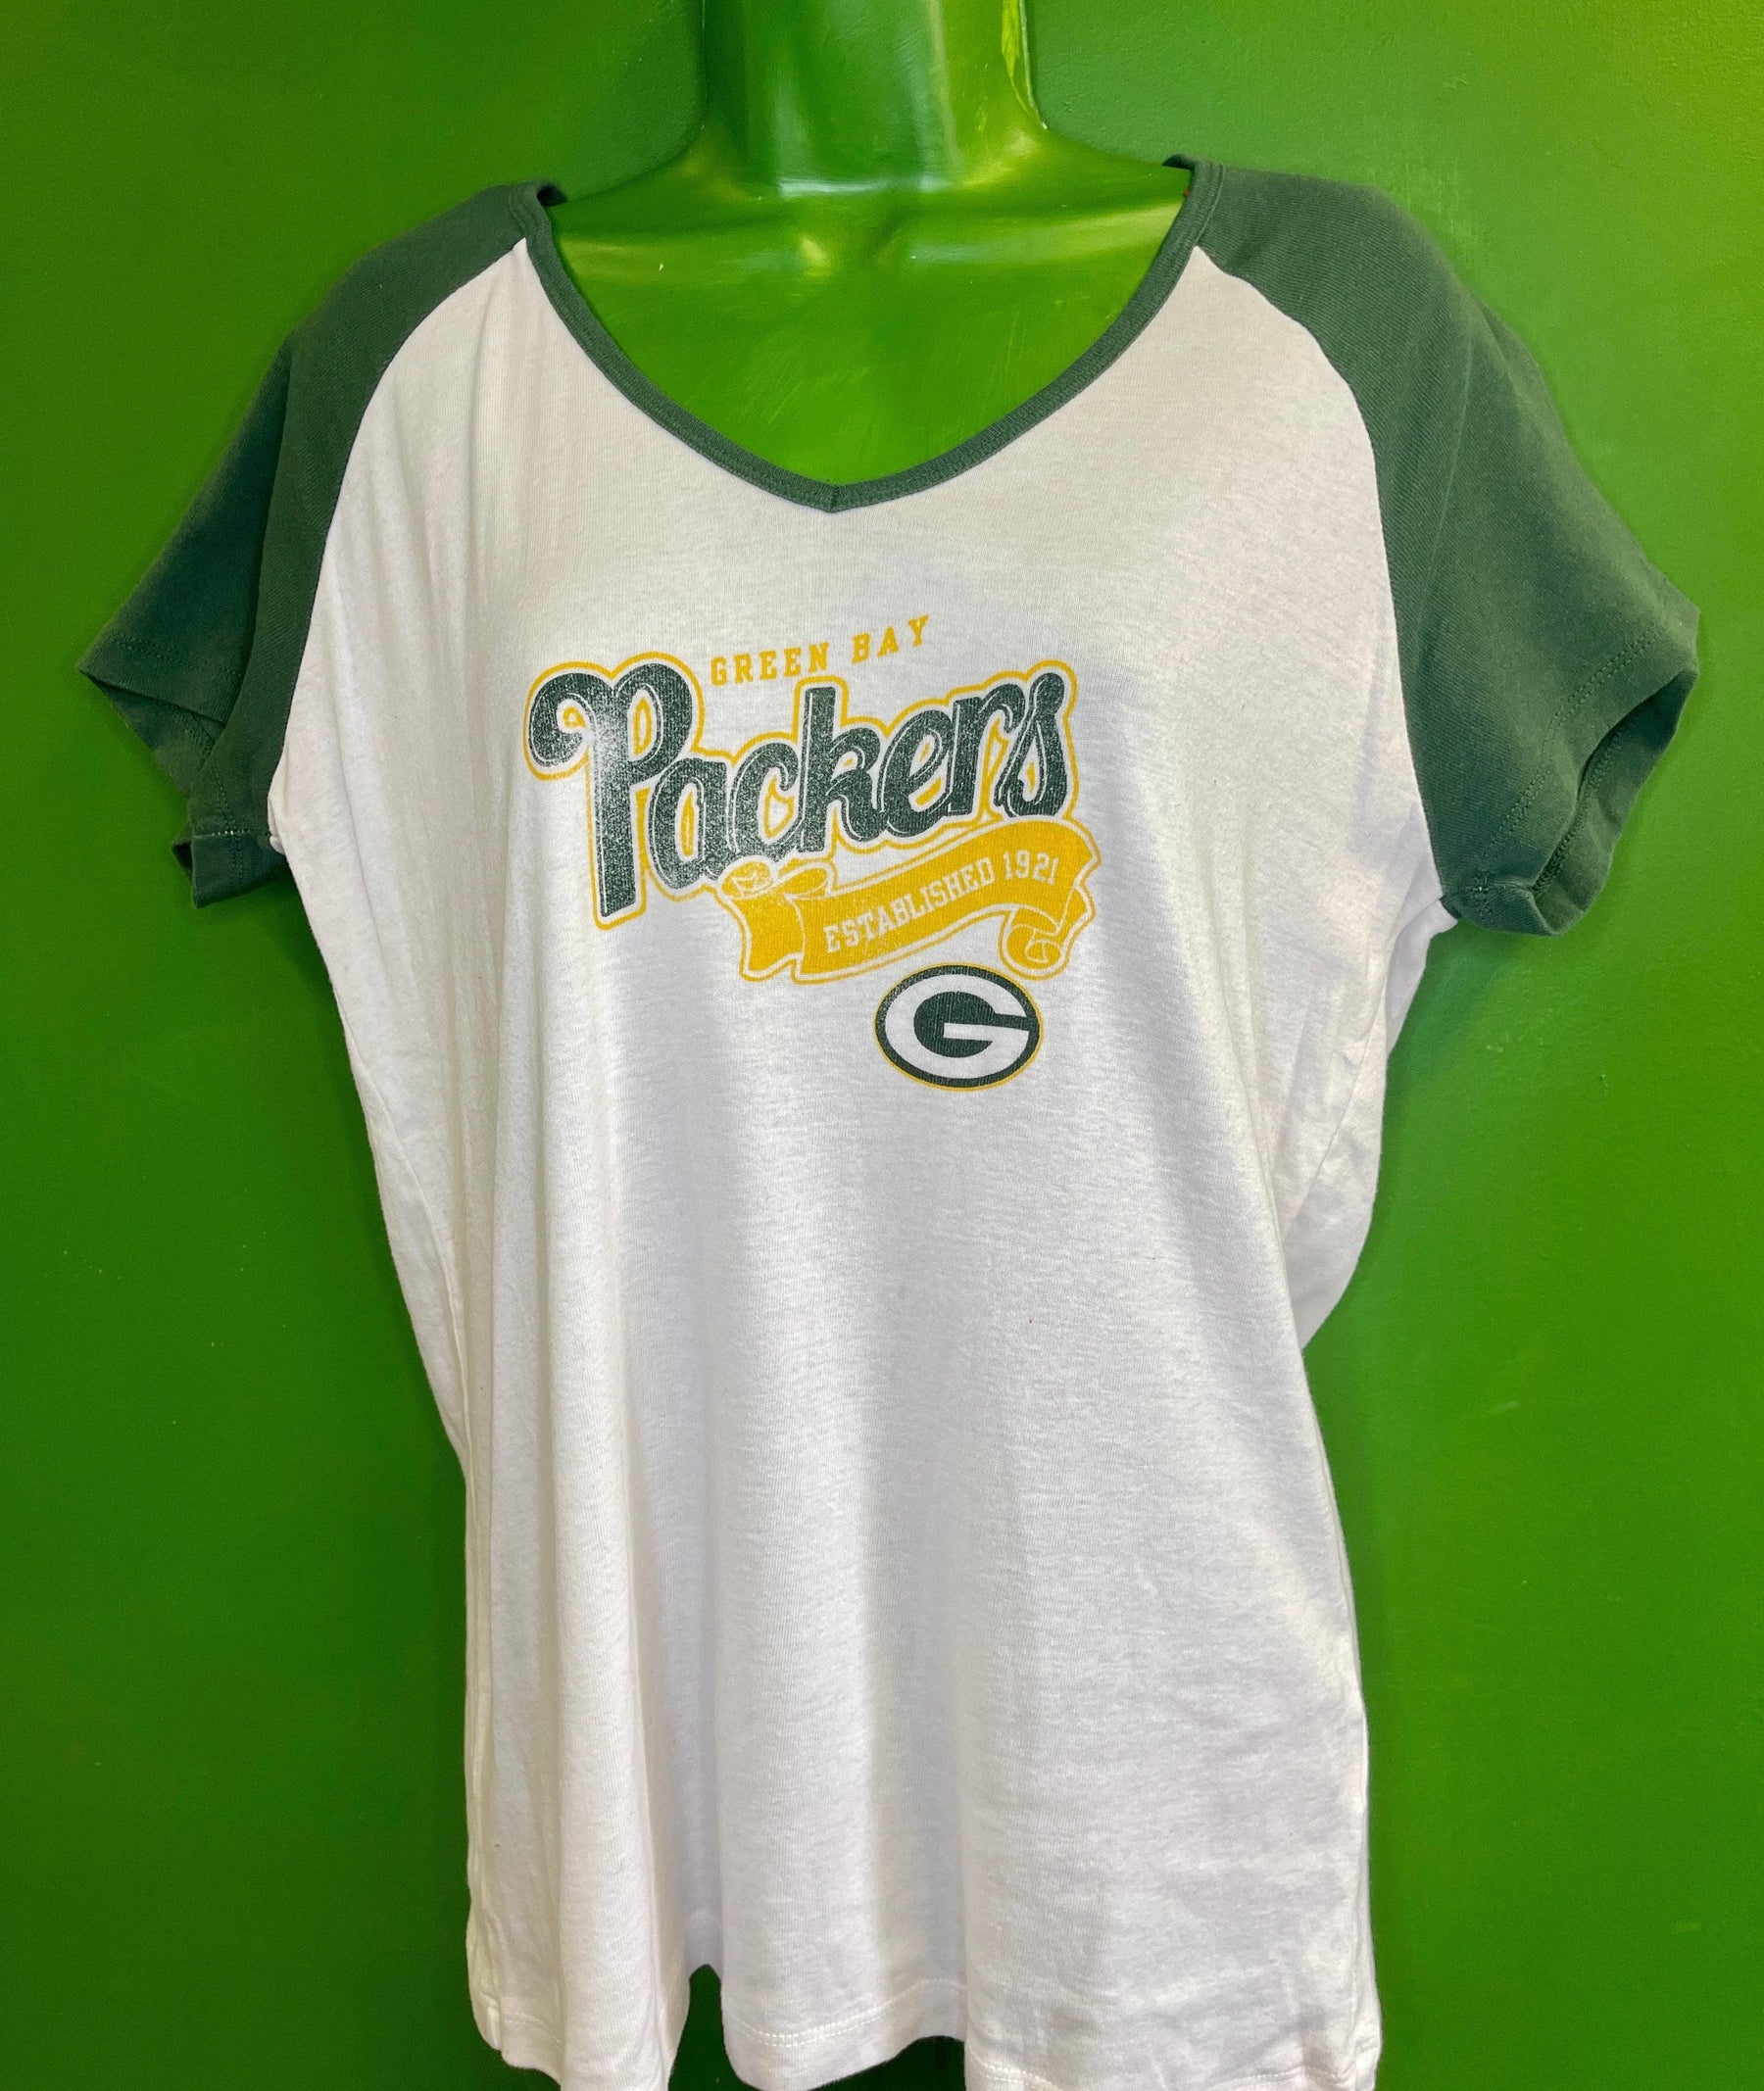 NFL Green Bay Packers White V-Neck T-Shirt Women's X-Large